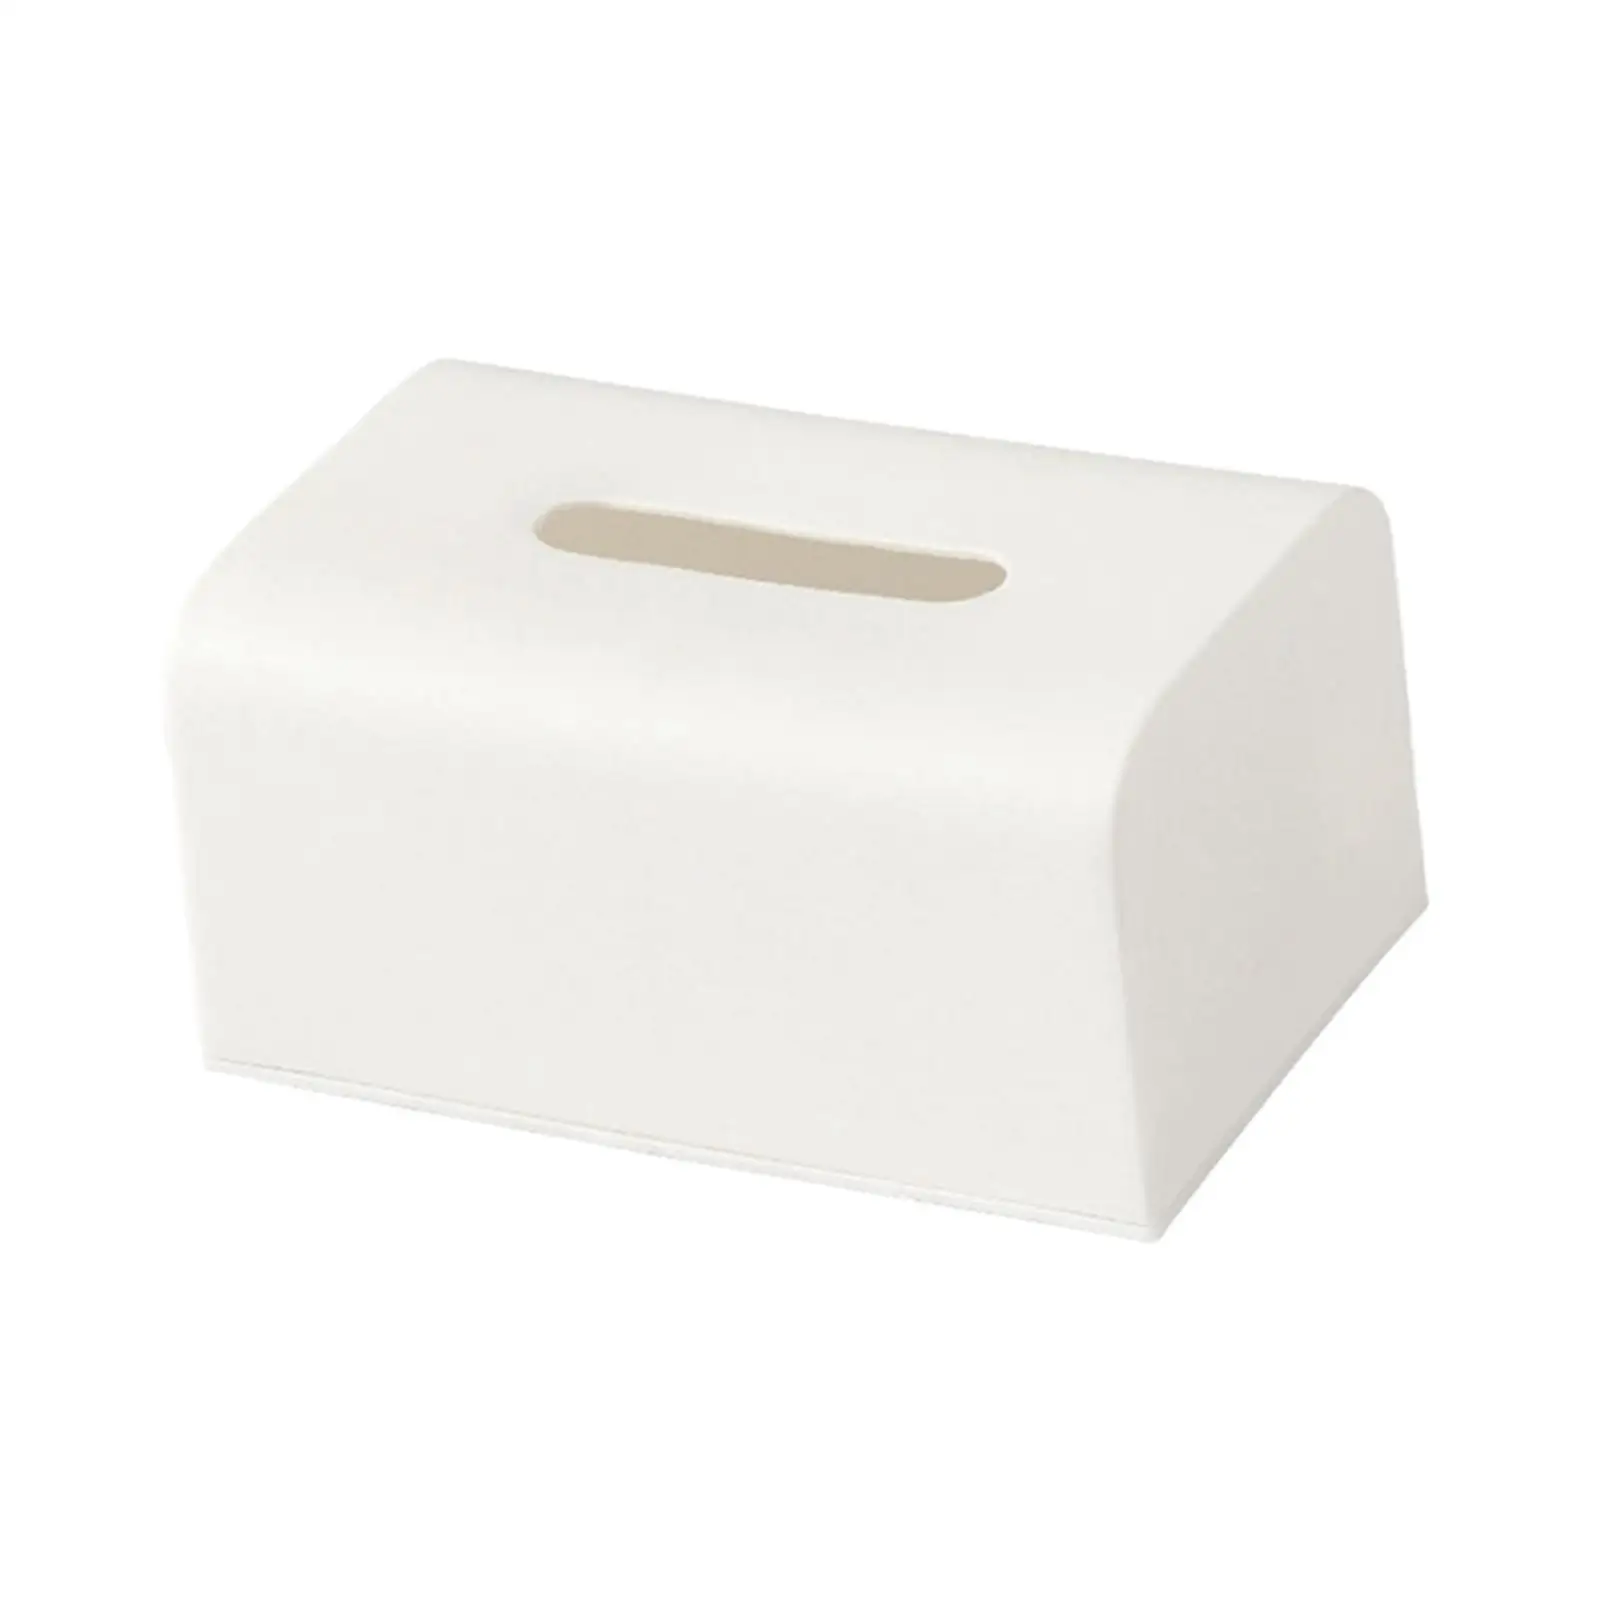 Tissue Box Tissue Case Bathroom Toilet Paper Holder for Kitchen Hotel Office